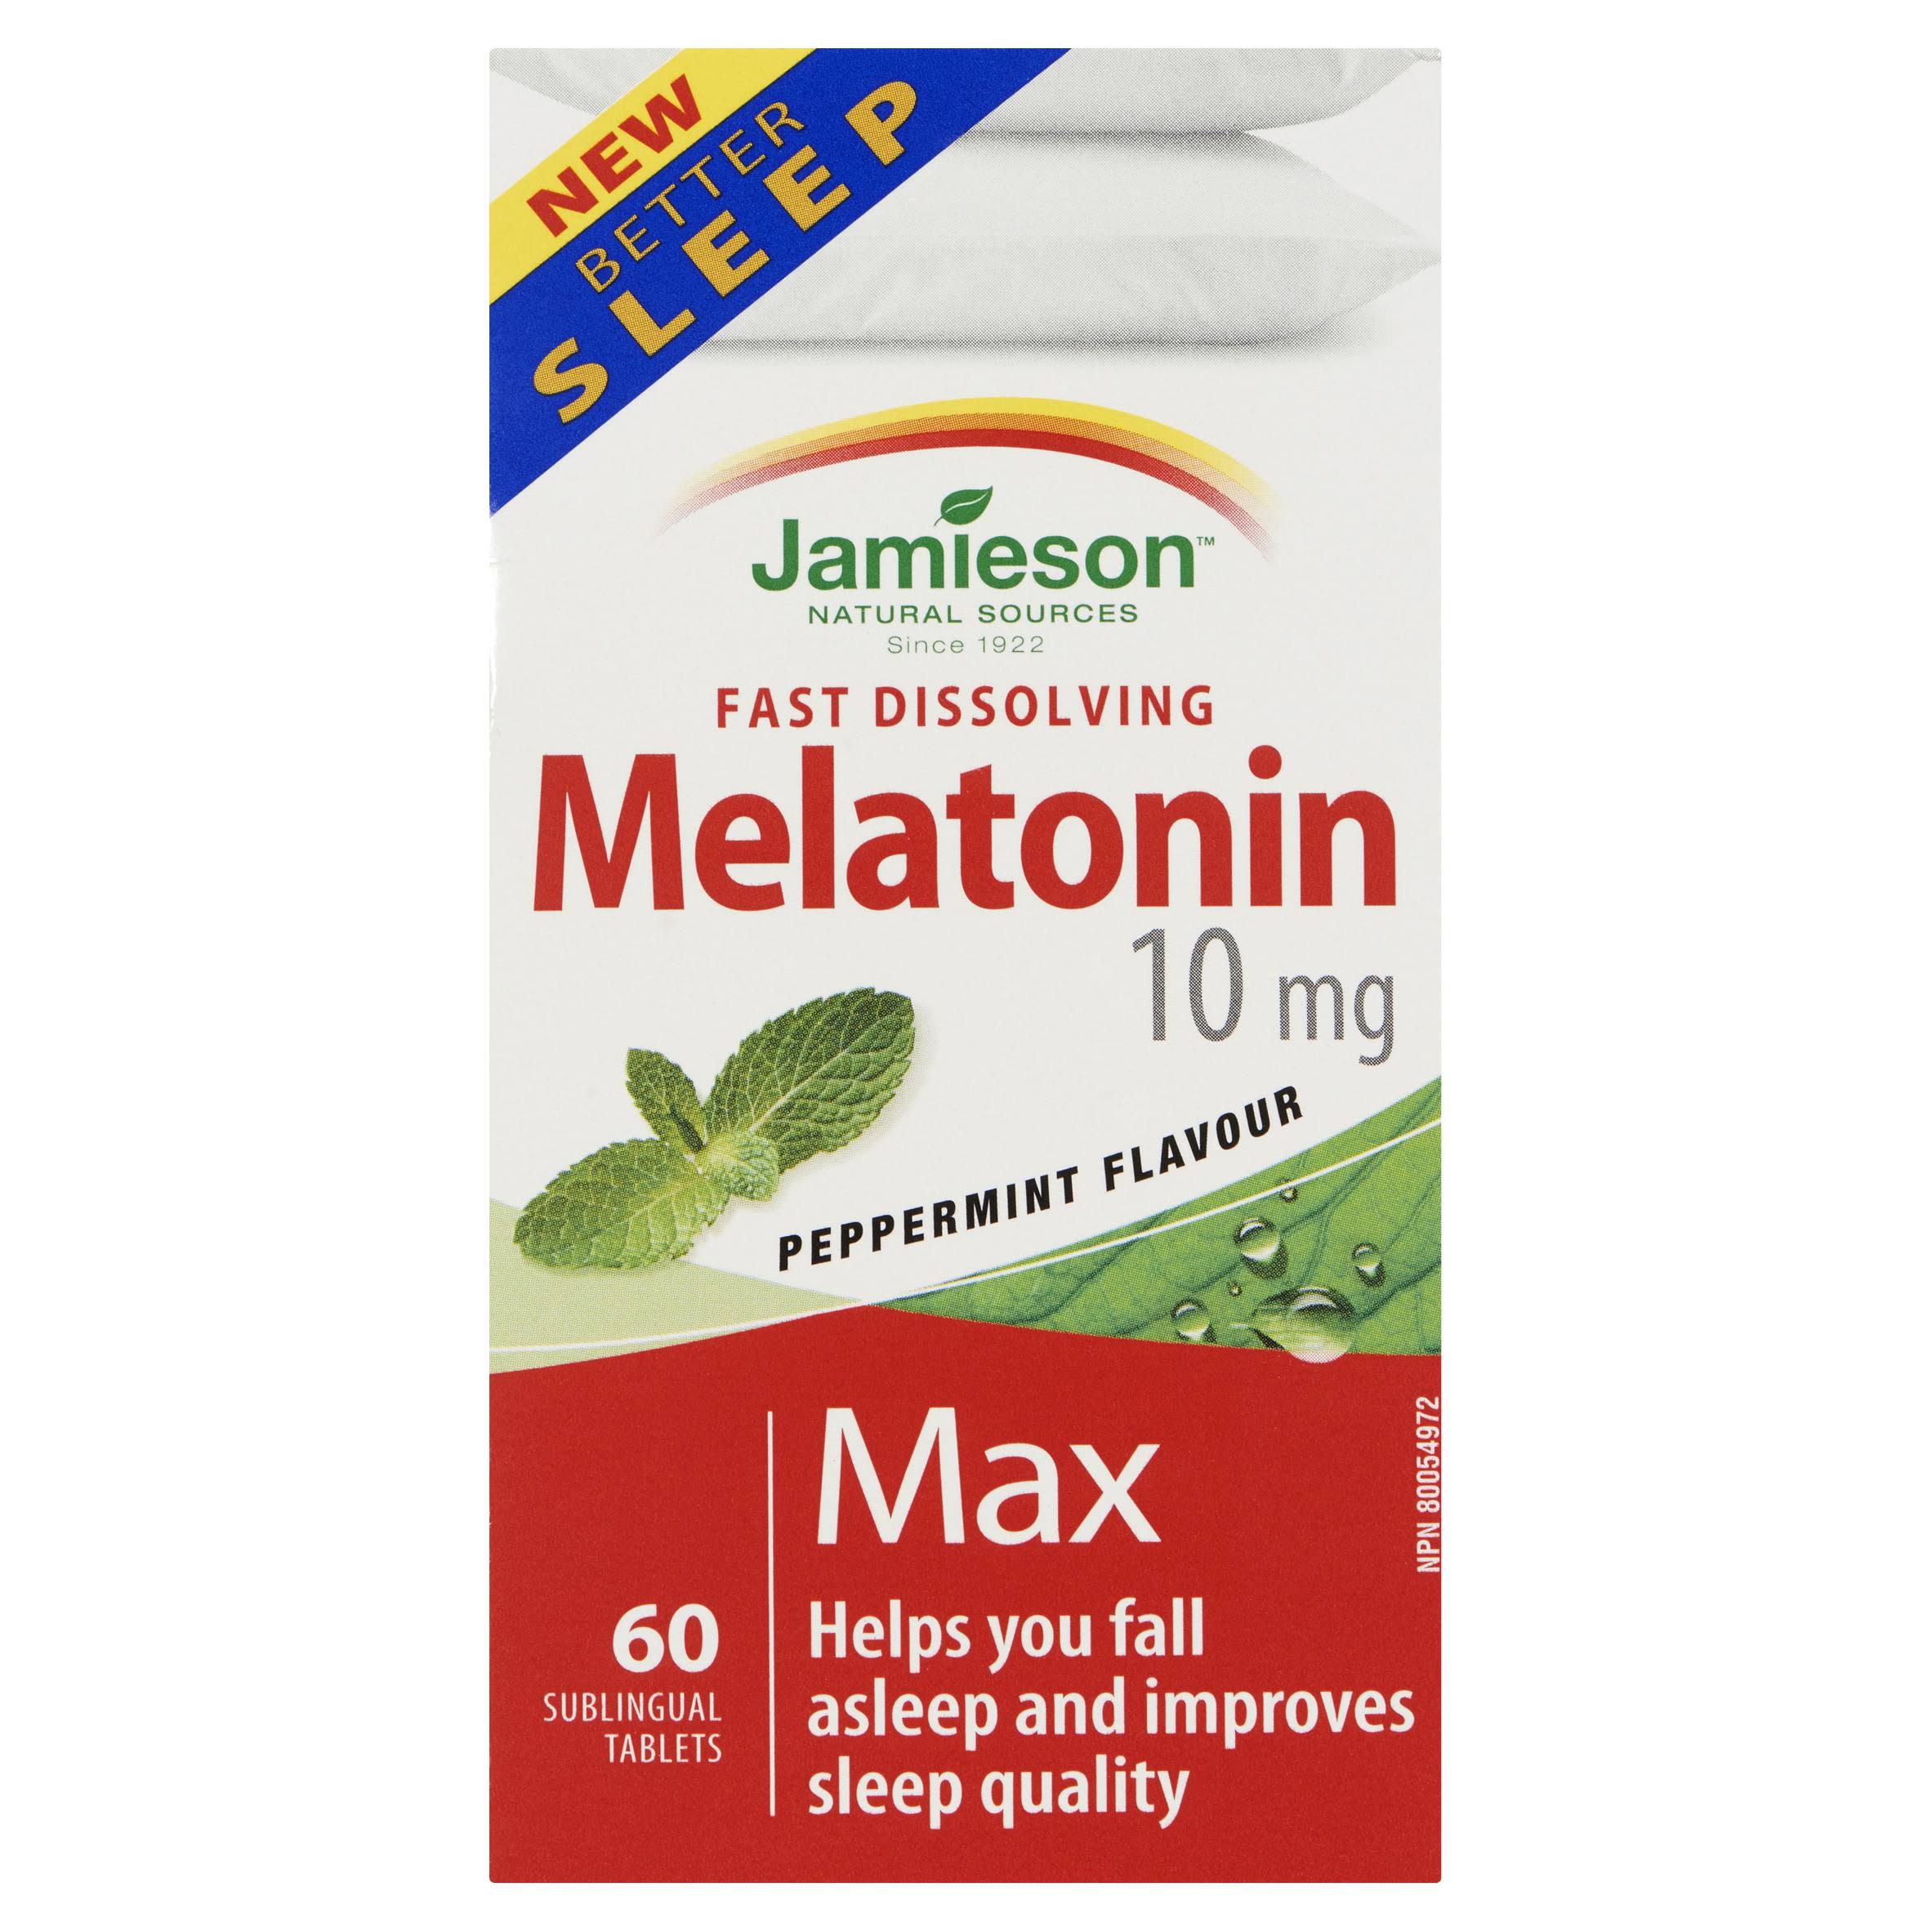 Jamieson Melatonin Medicinal Sleep Aids Fast Dissolving Tablets - Peppermint, 10mg, 60ct60